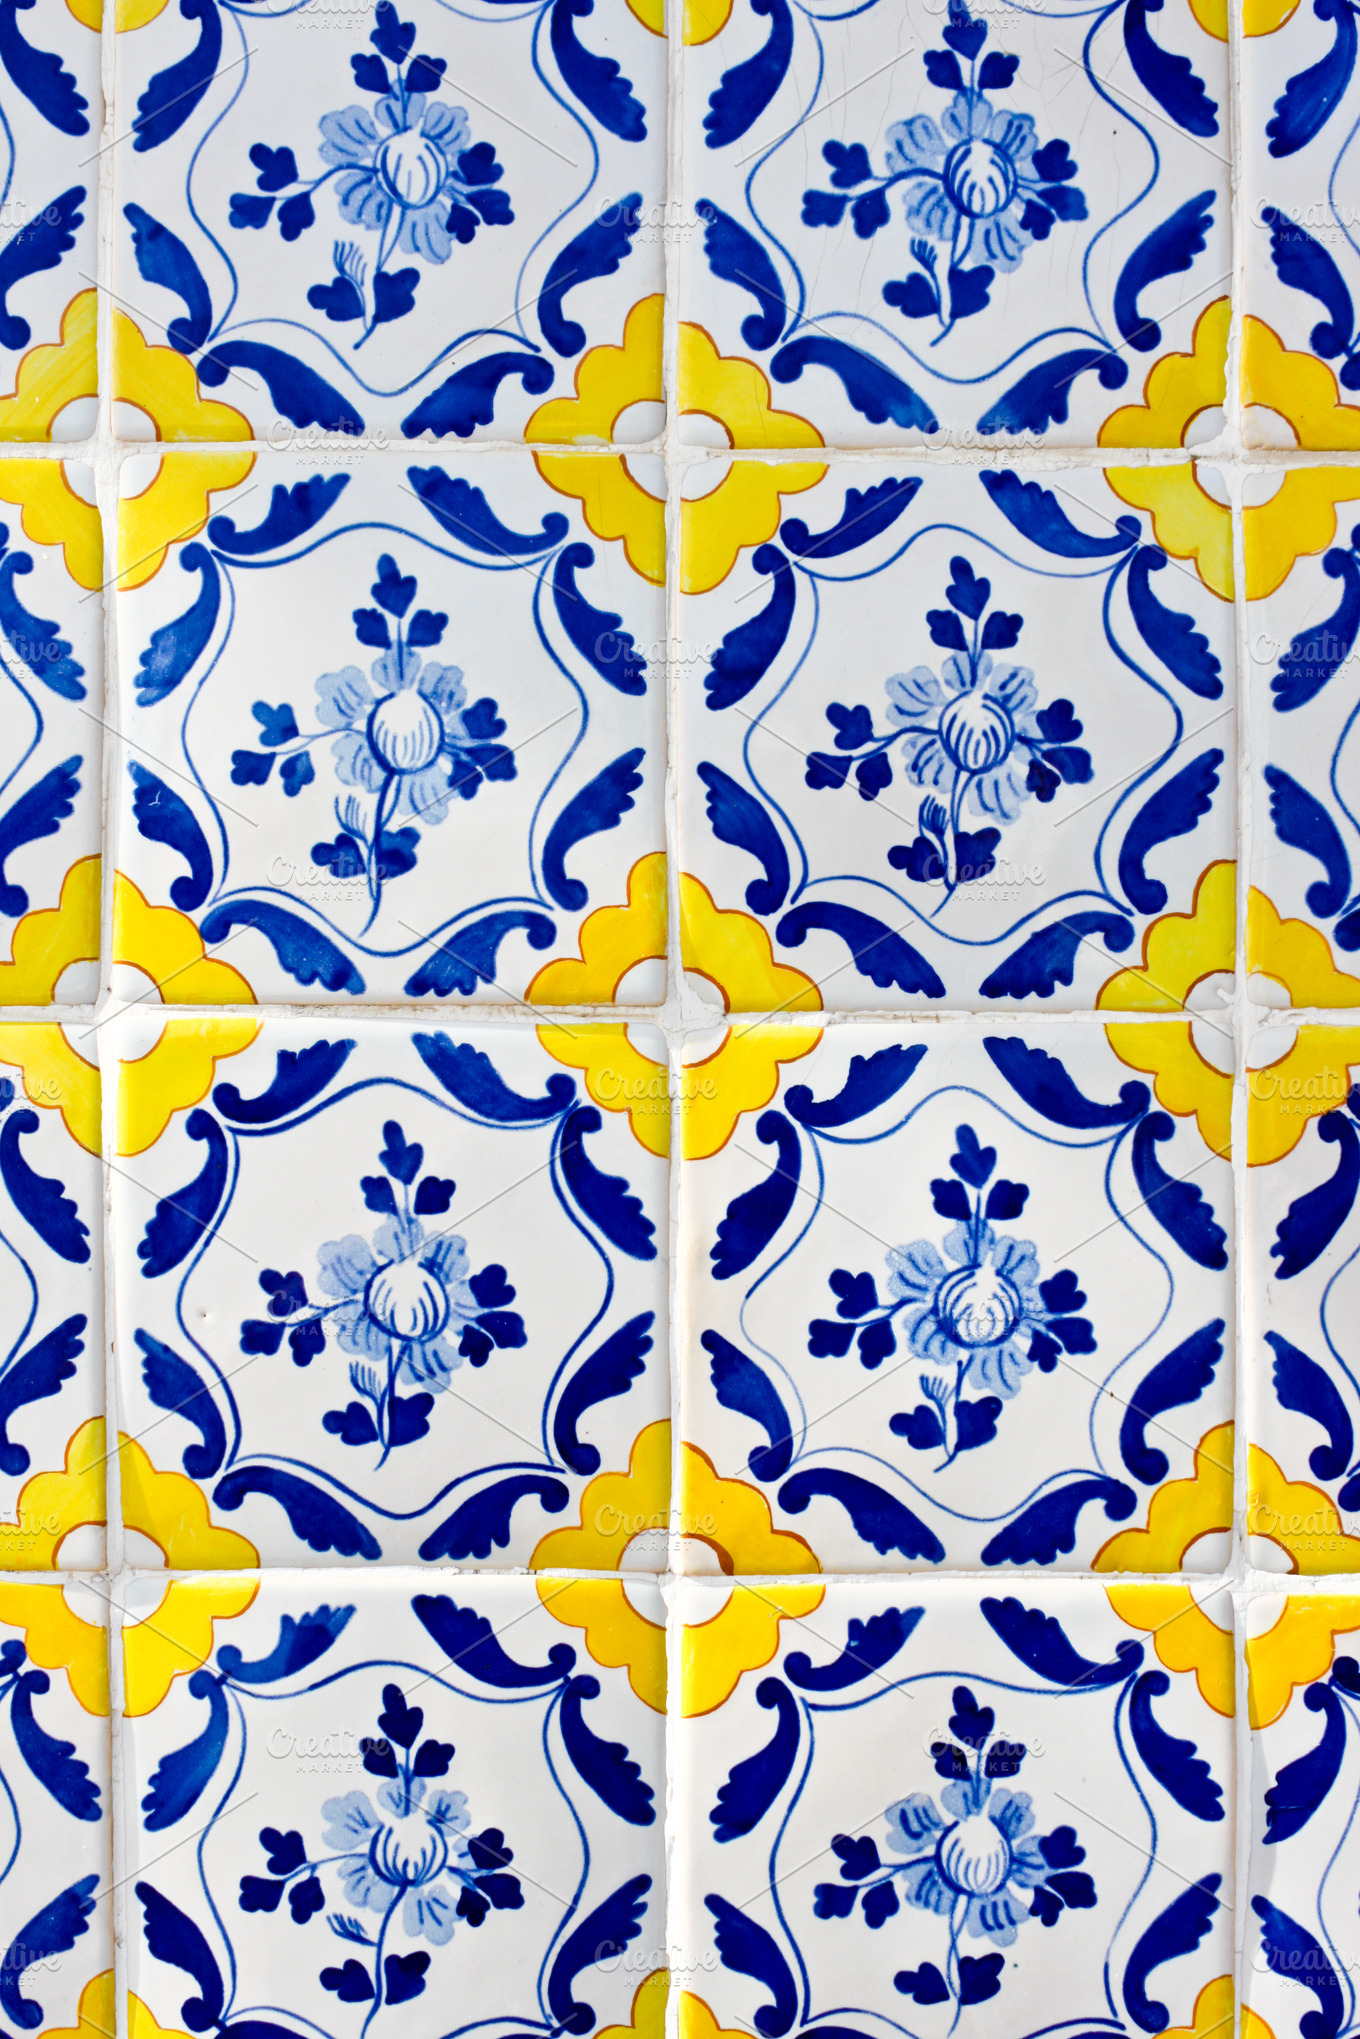 Portuguese tiles azulejos. | High-Quality Stock Photos ~ Creative Market